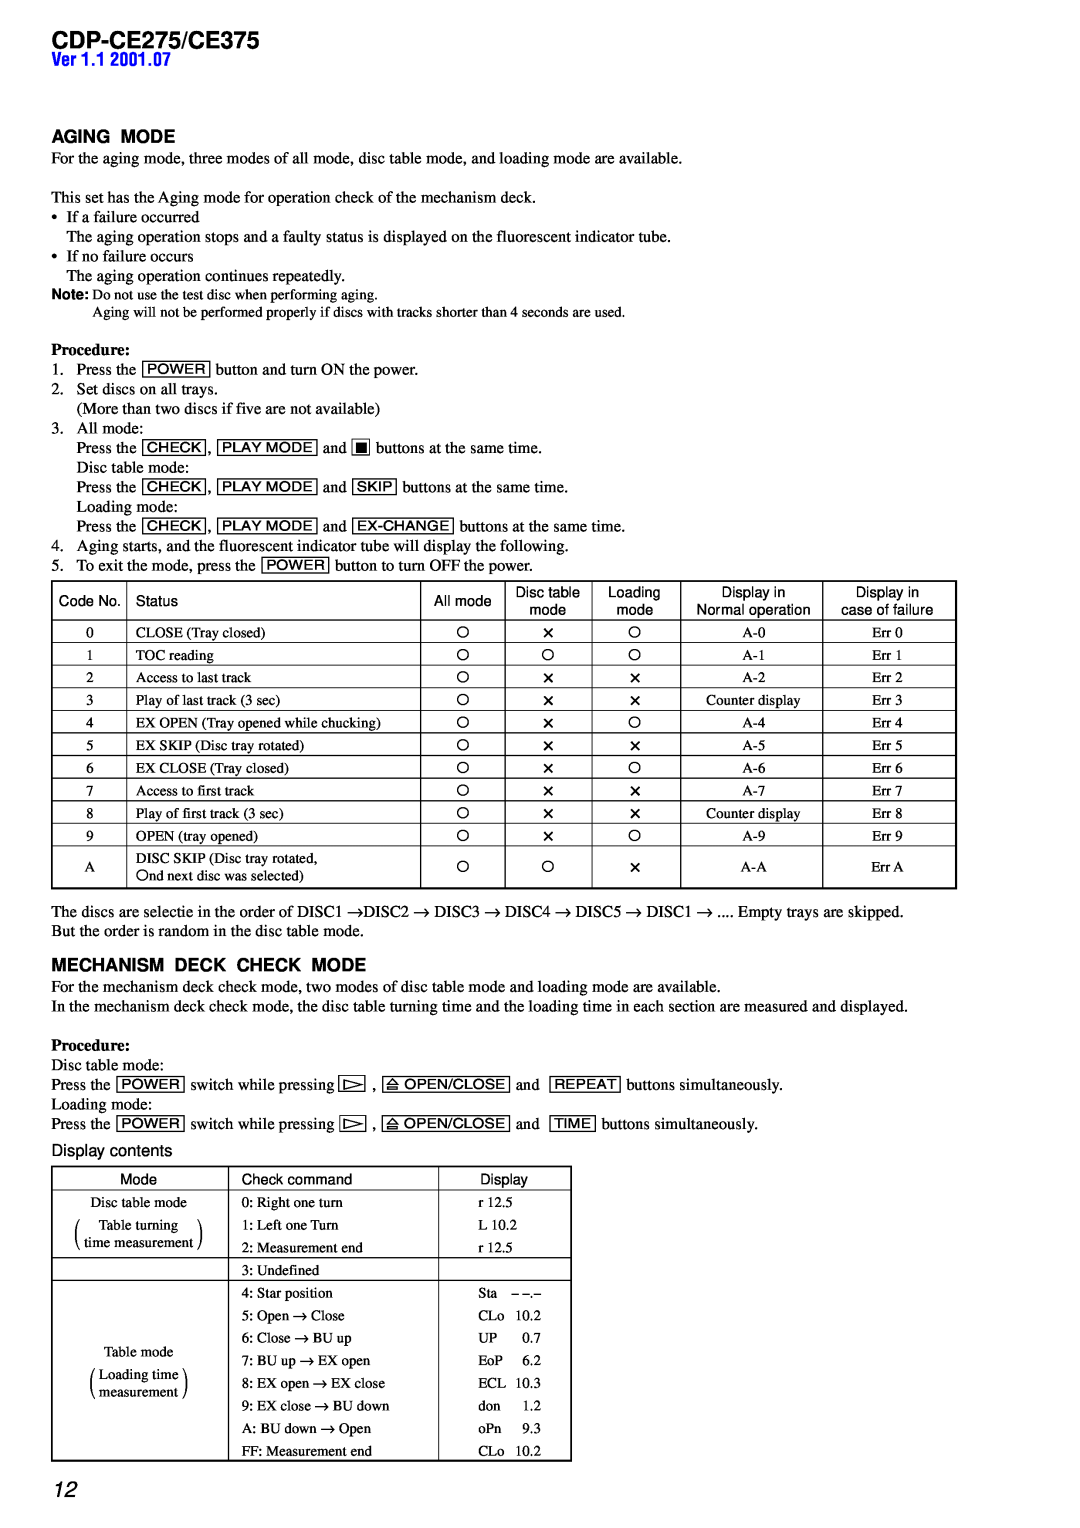 Sony CDP-CE375 service manual Aging Mode, Mechanism Deck Check Mode, Procedure, CDP-CE275/CE375, Ver 